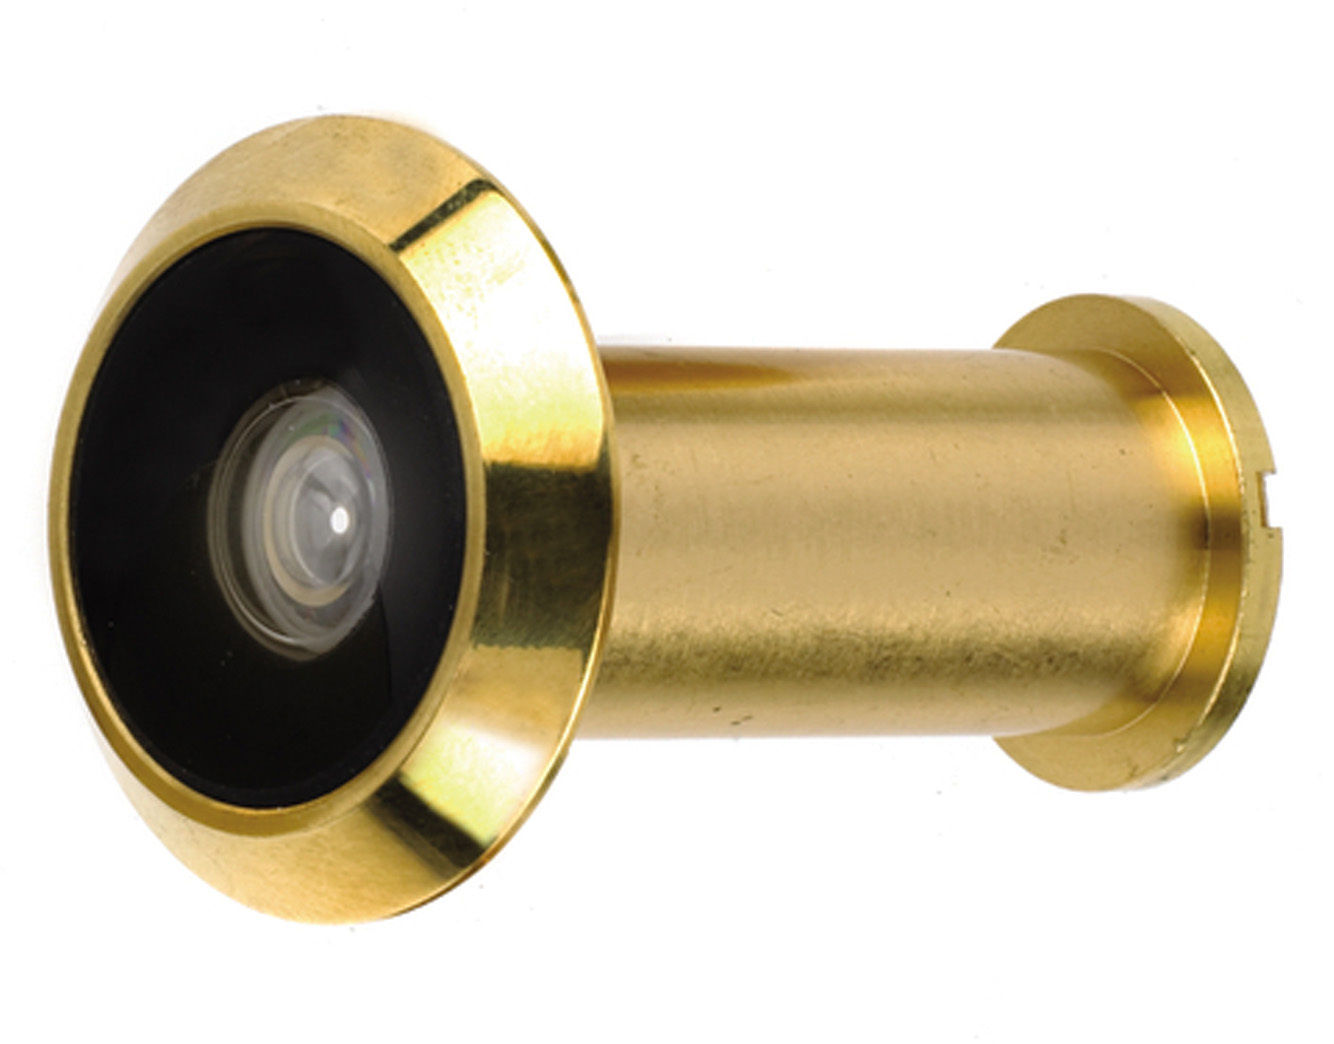 Frisco Door Viewer Spy Peep Hole Polished Brass/Chrome Security Chain Lock 